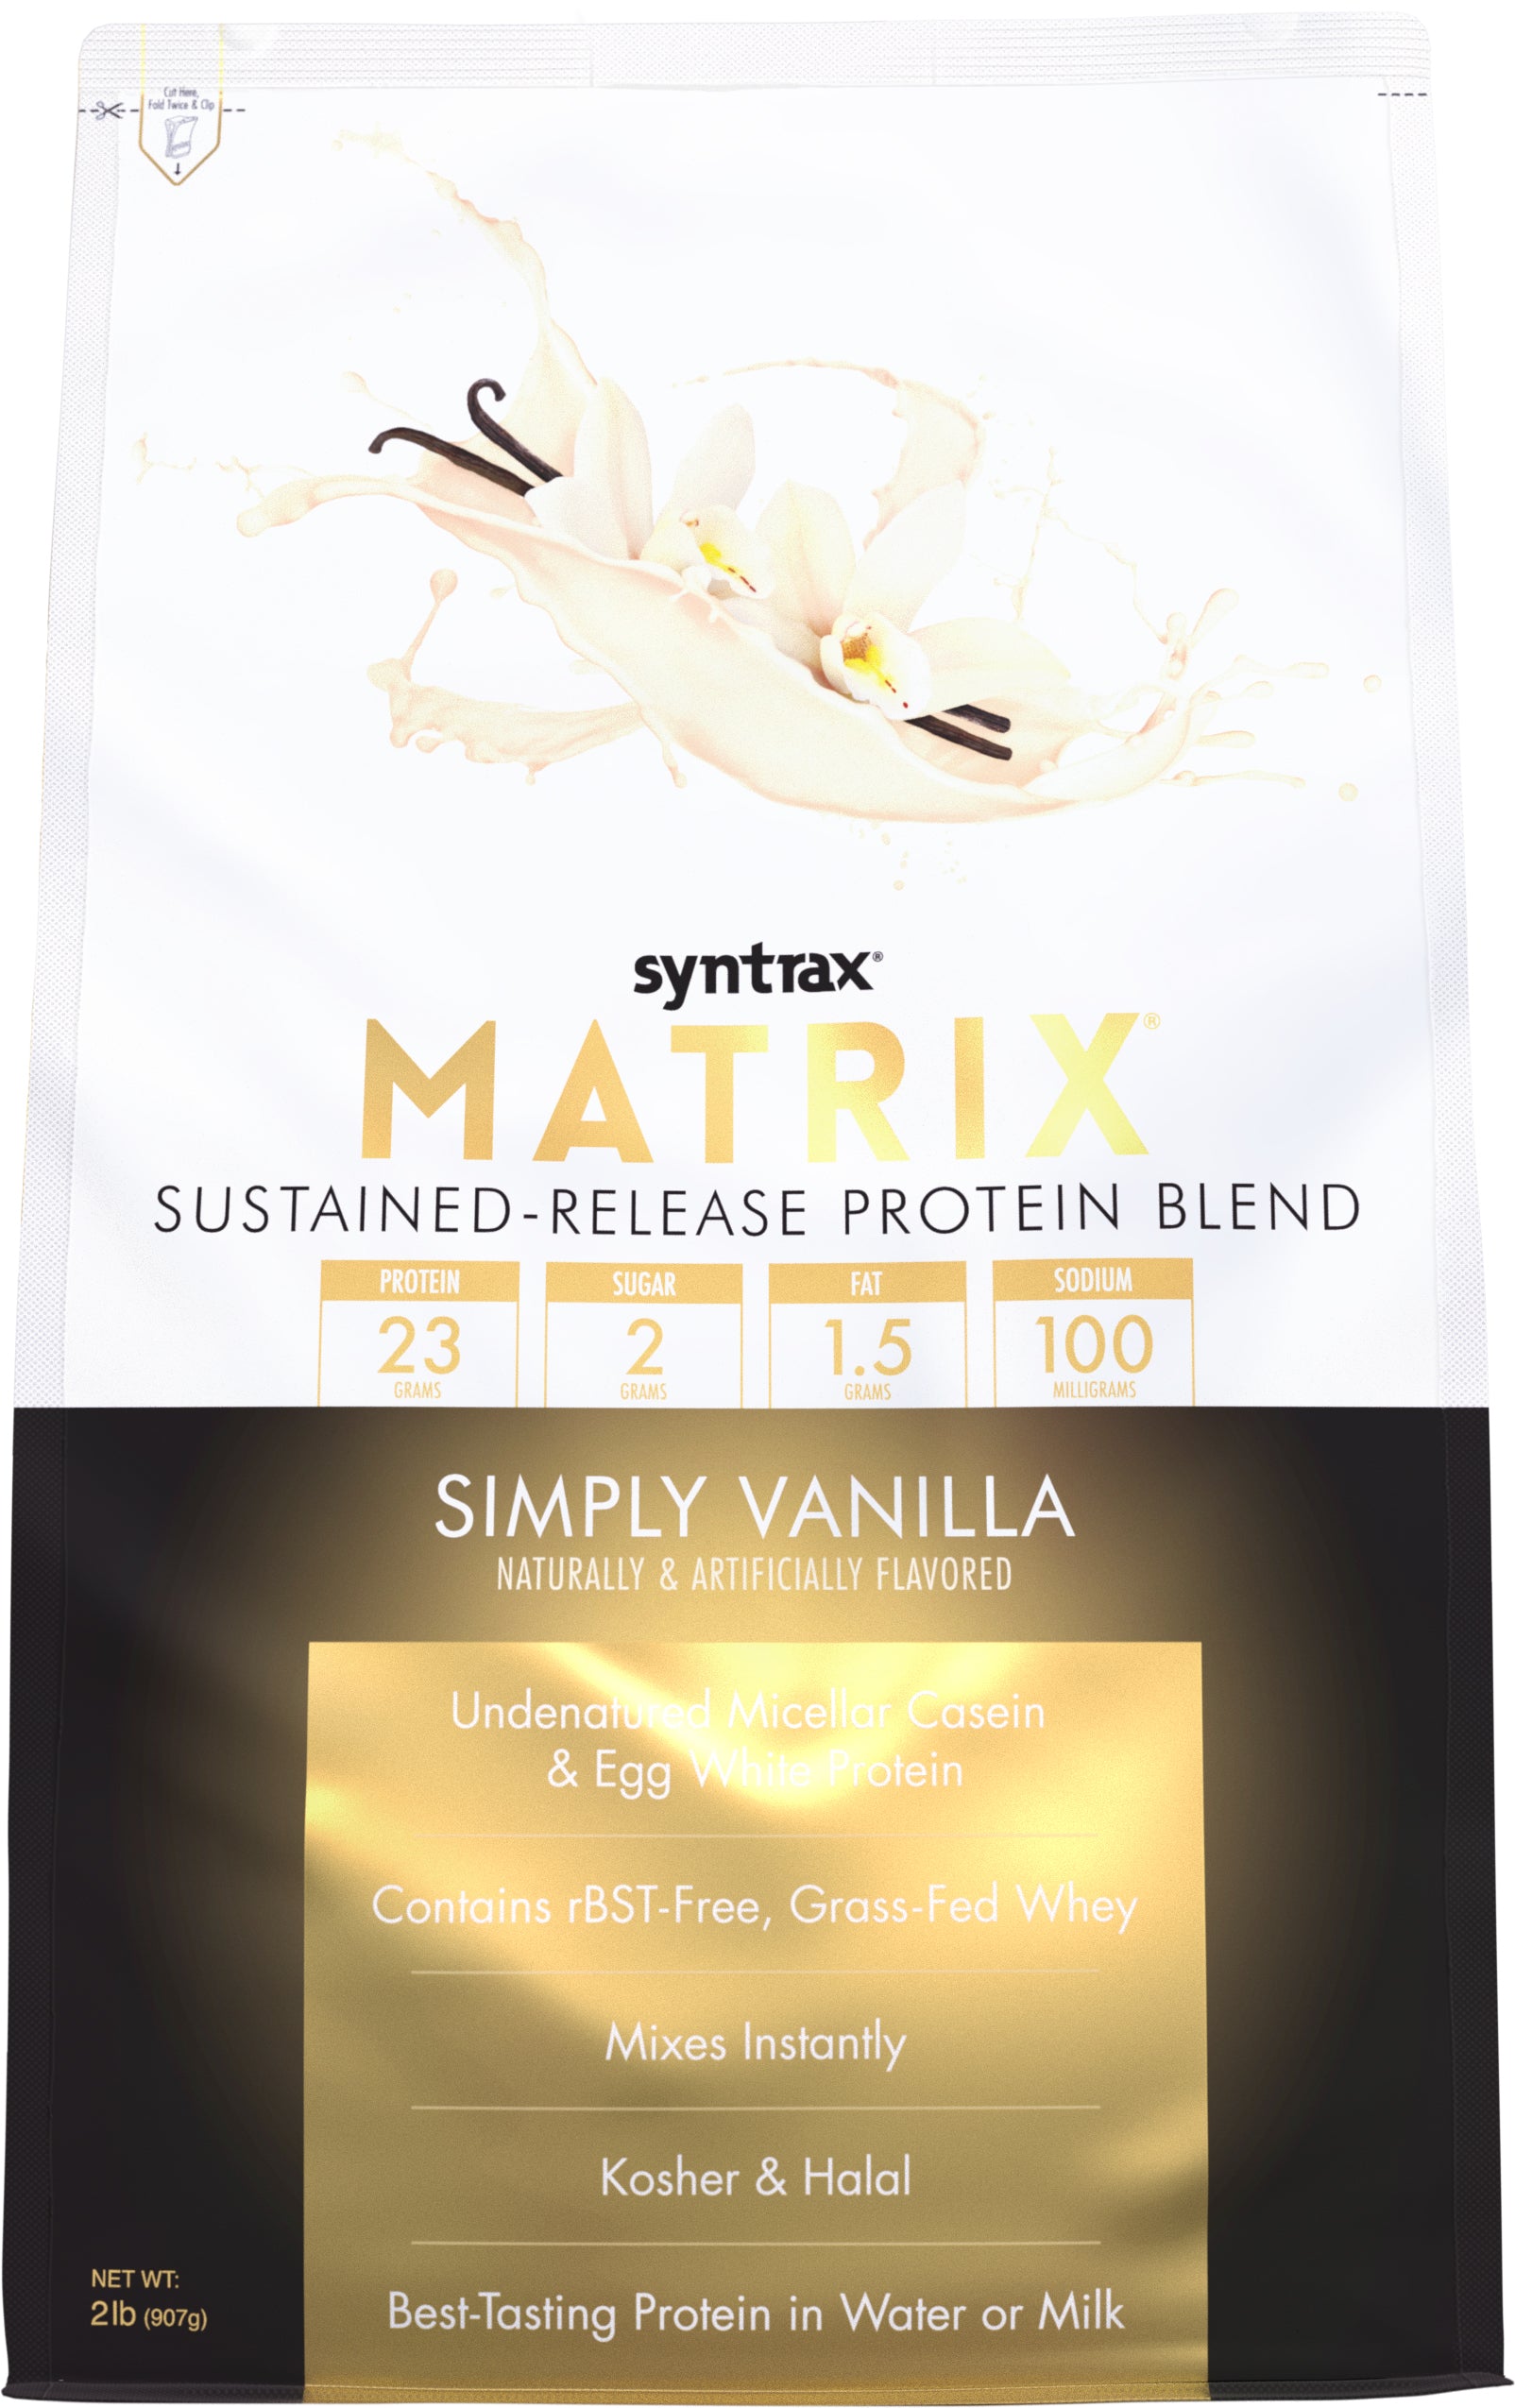 #Flavor_Simply Vanilla #Size_2LB Bag